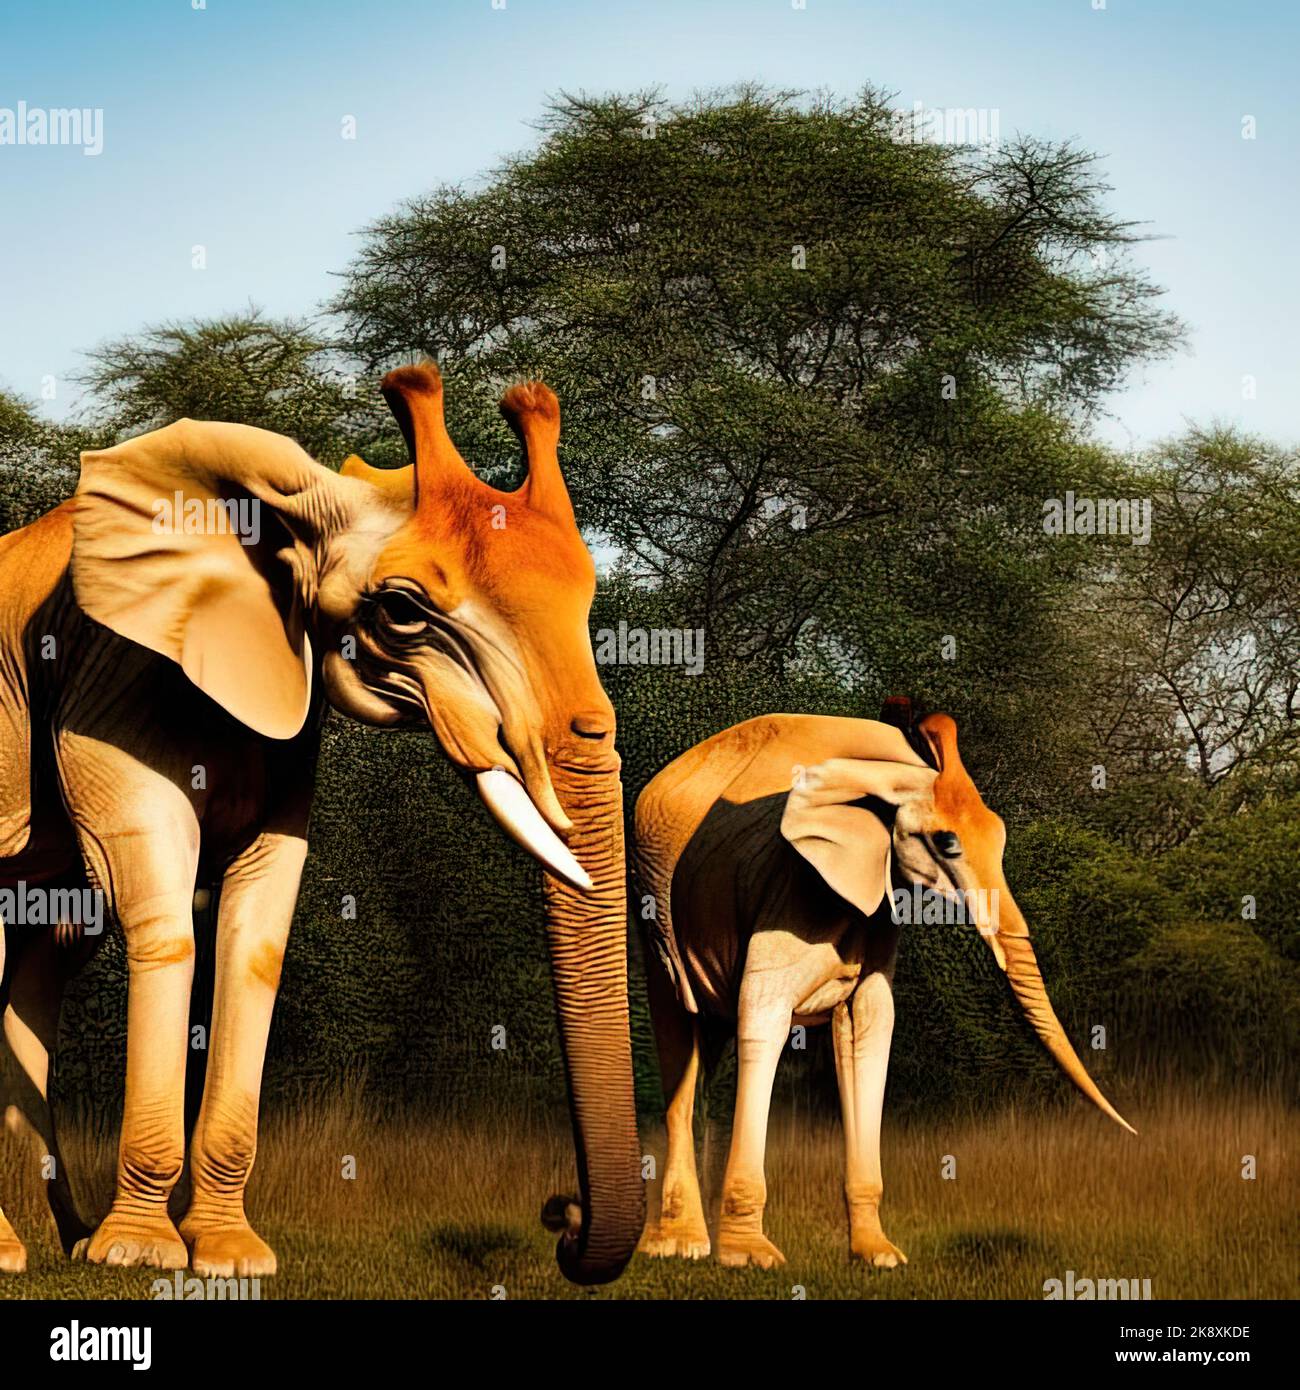 The imaginary animals similar to African bush elephant Stock Photo